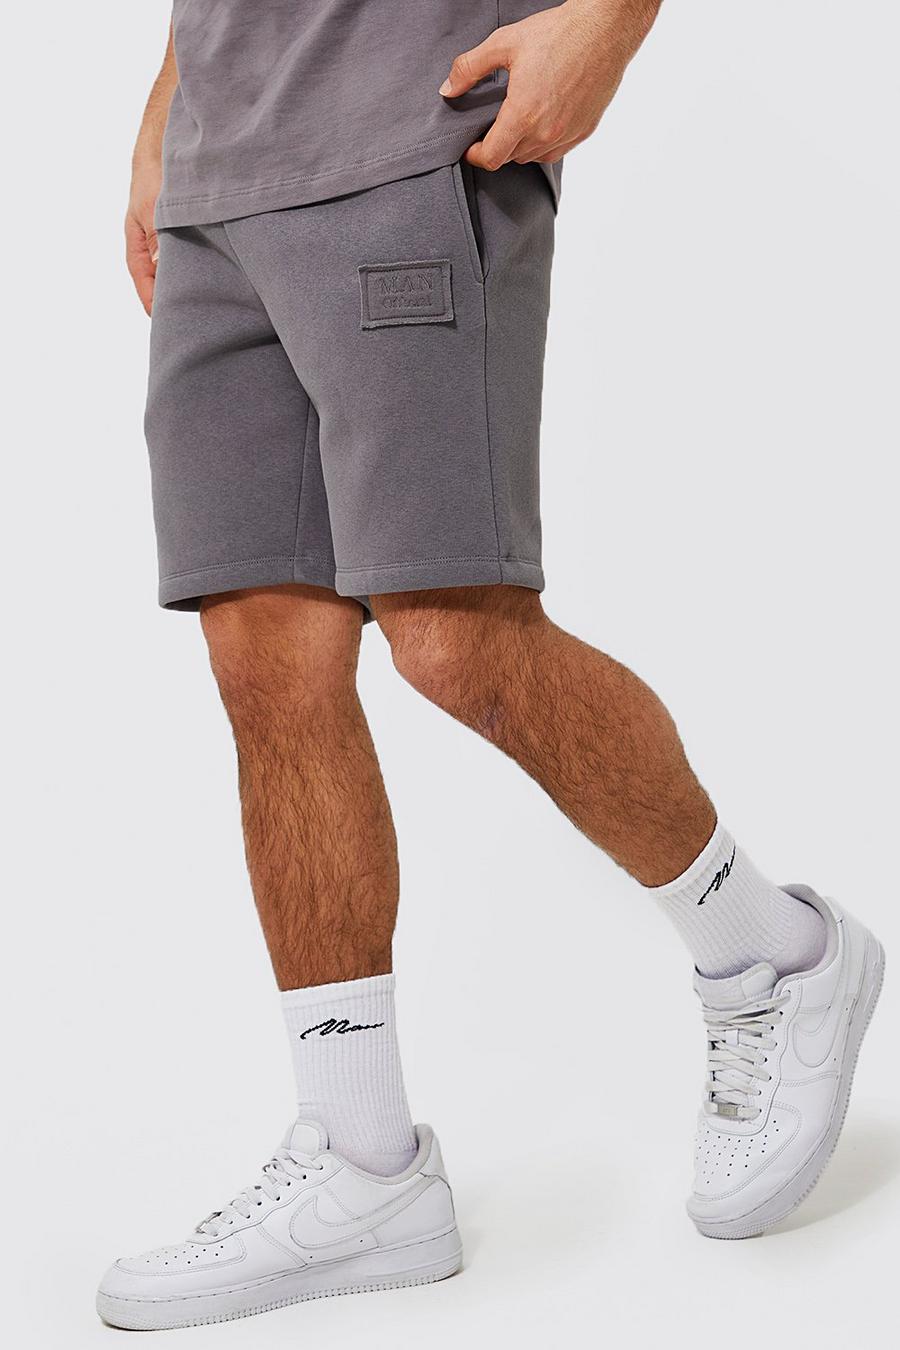 Mittellange zerrissene Slim-Fit Shorts, Charcoal grau